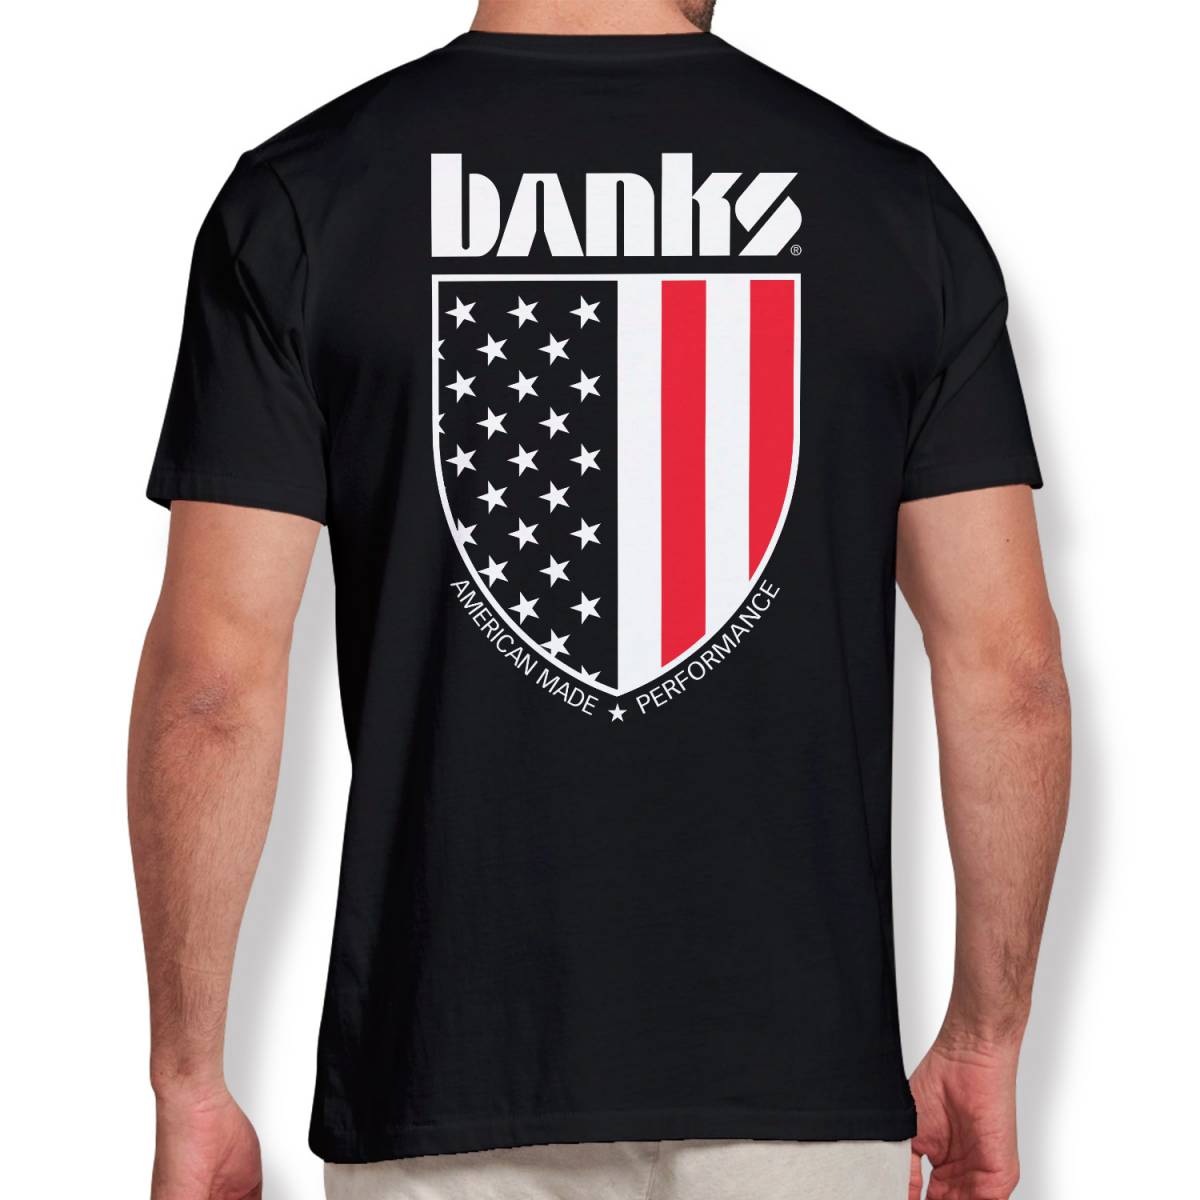 Banks American Made shirt